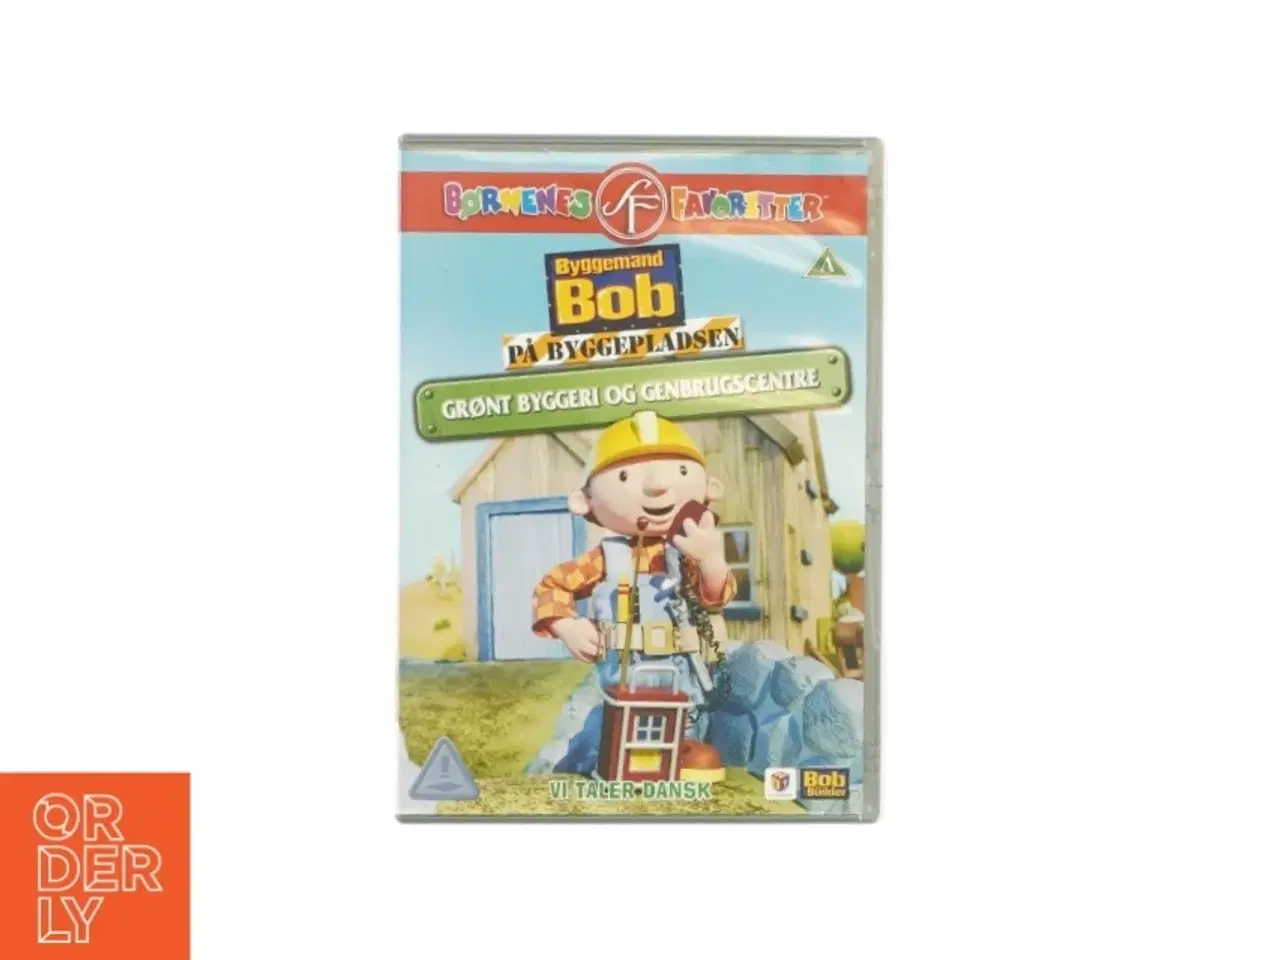 Billede 1 - Byggemand Bob på byggepladsen (DVD)